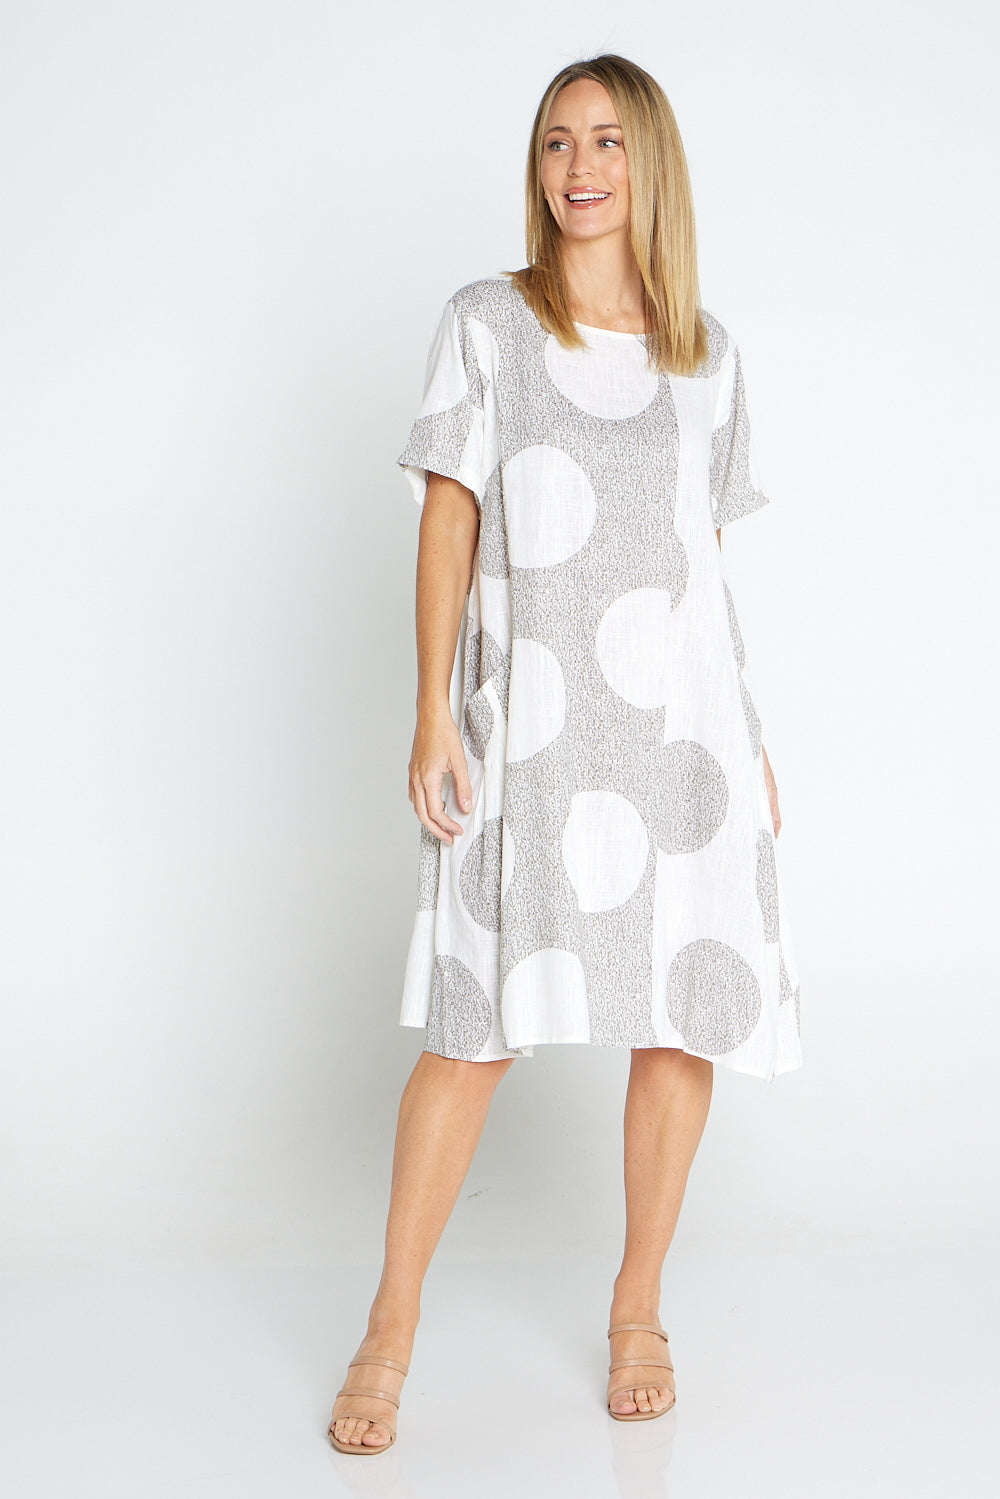 Amayah Linen Dress - Brown/White Circles